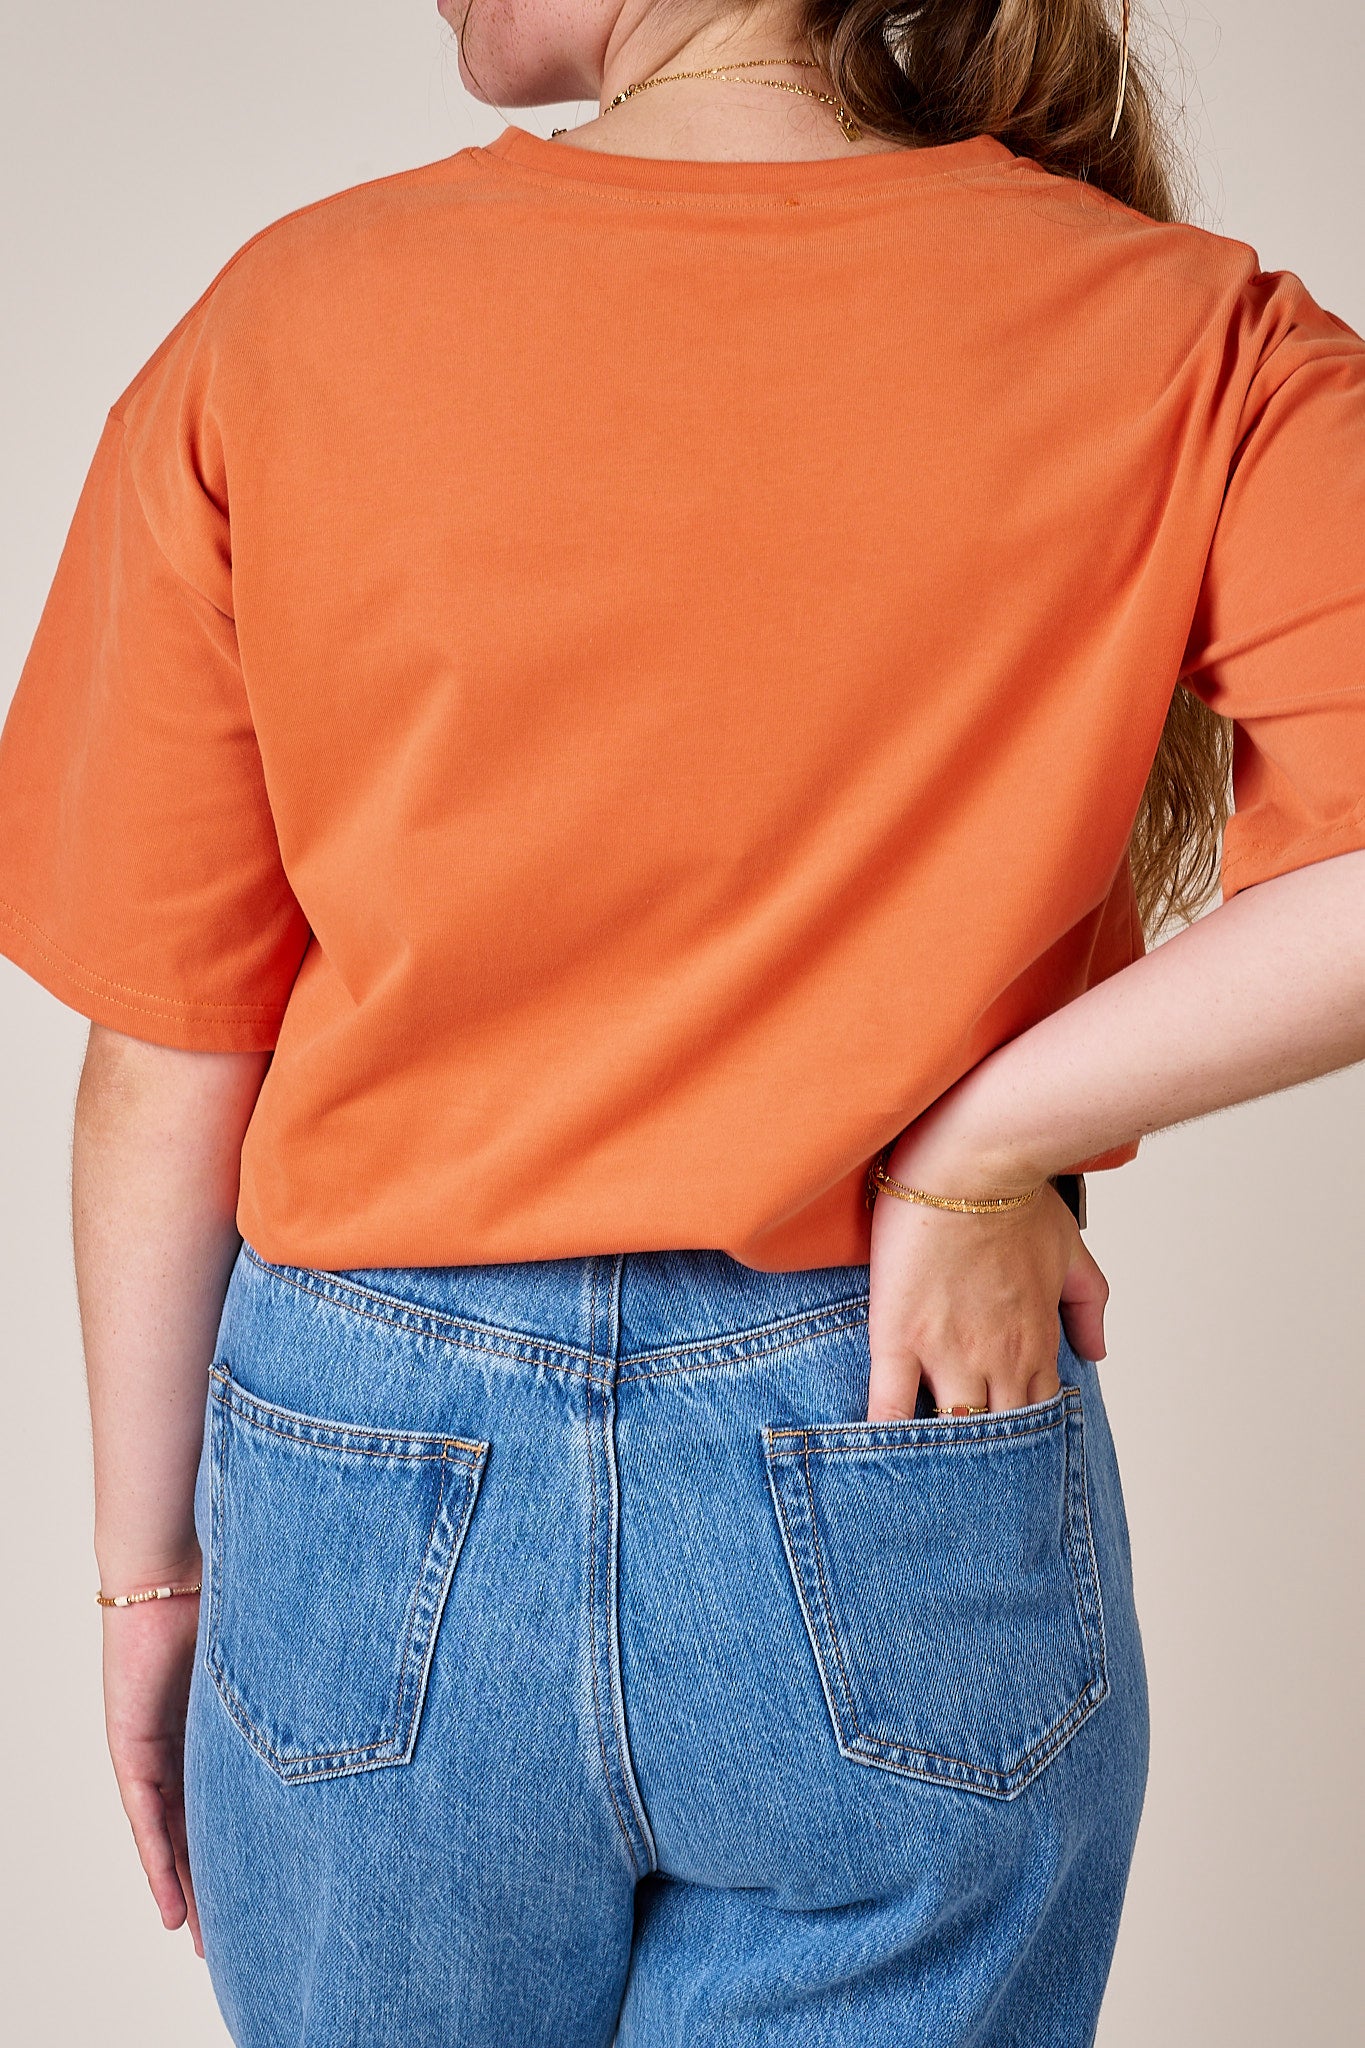 Lenny T-Shirt Orange